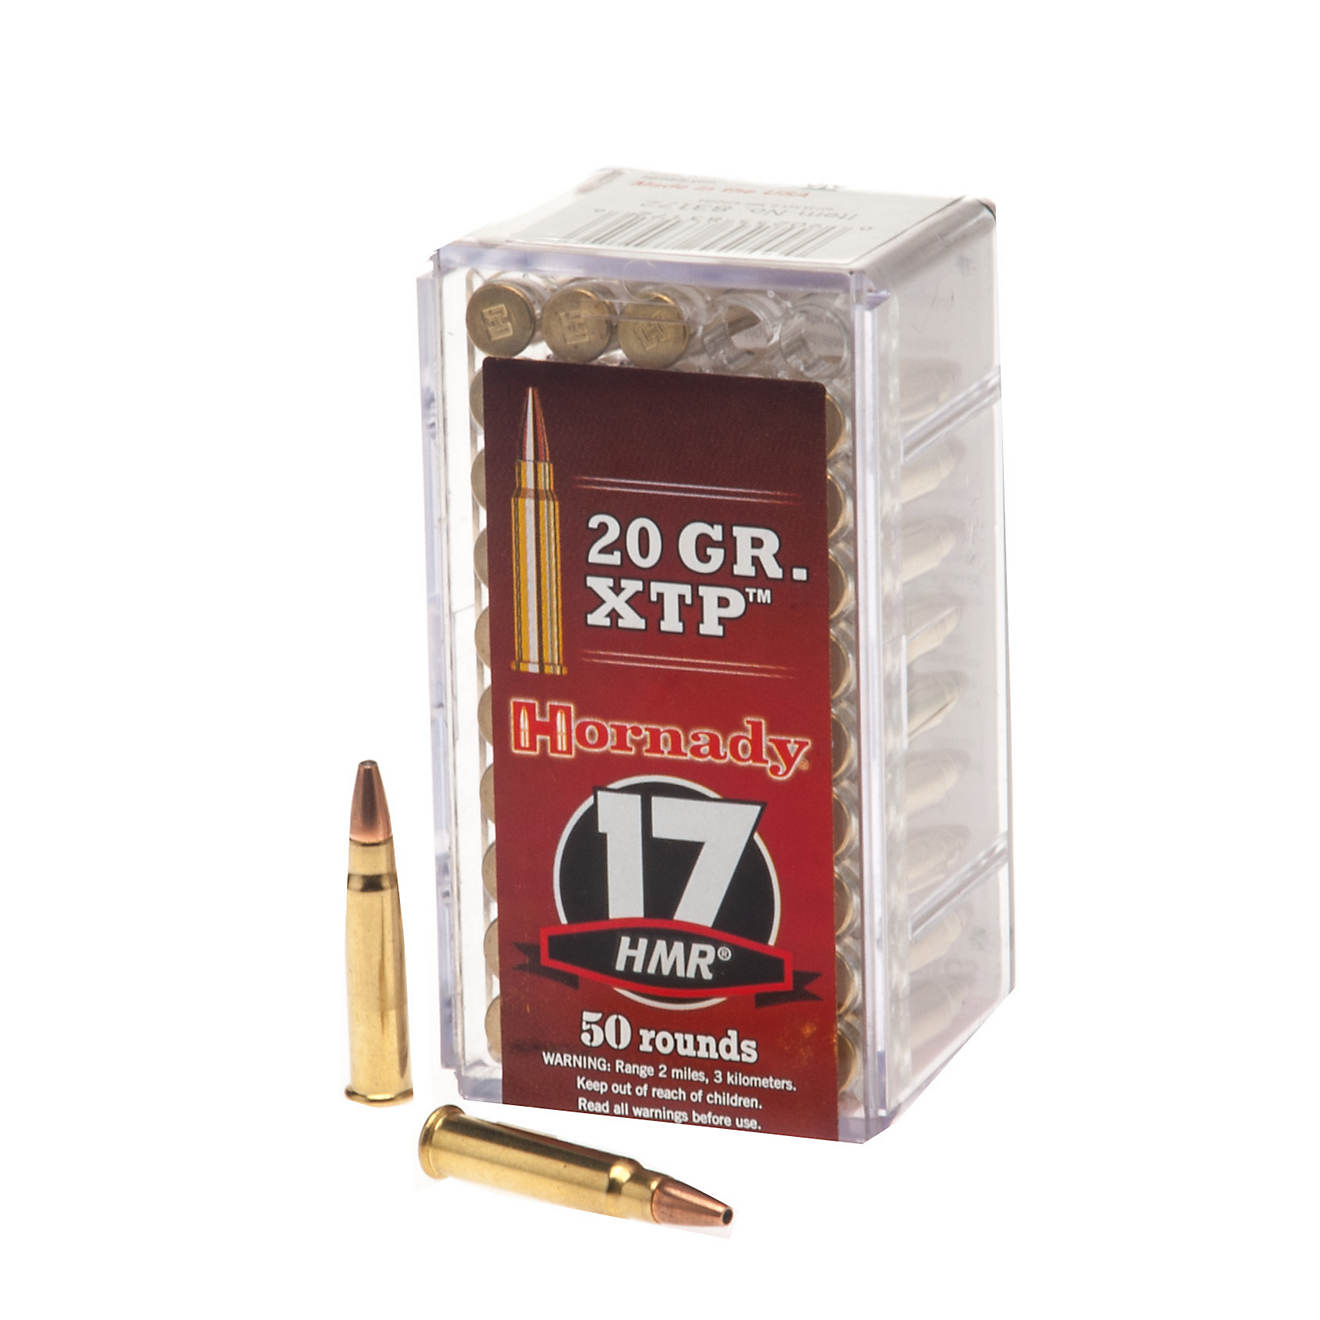 Hornady HP XTP .17 HMR 20-Grain Rimfire Rifle Ammunition - 50 Rounds                                                             - view number 1